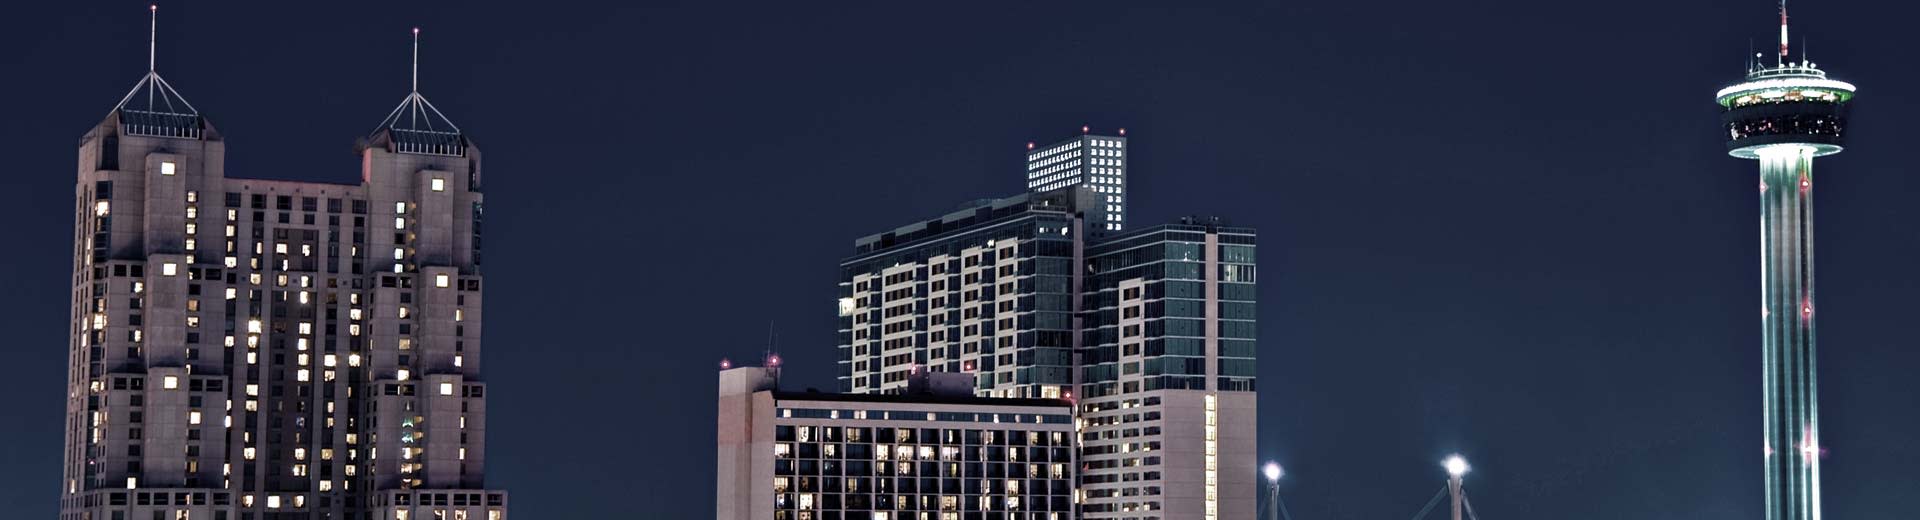 Two imposing skyscrapers pierce the starless night sky in San Antonio.